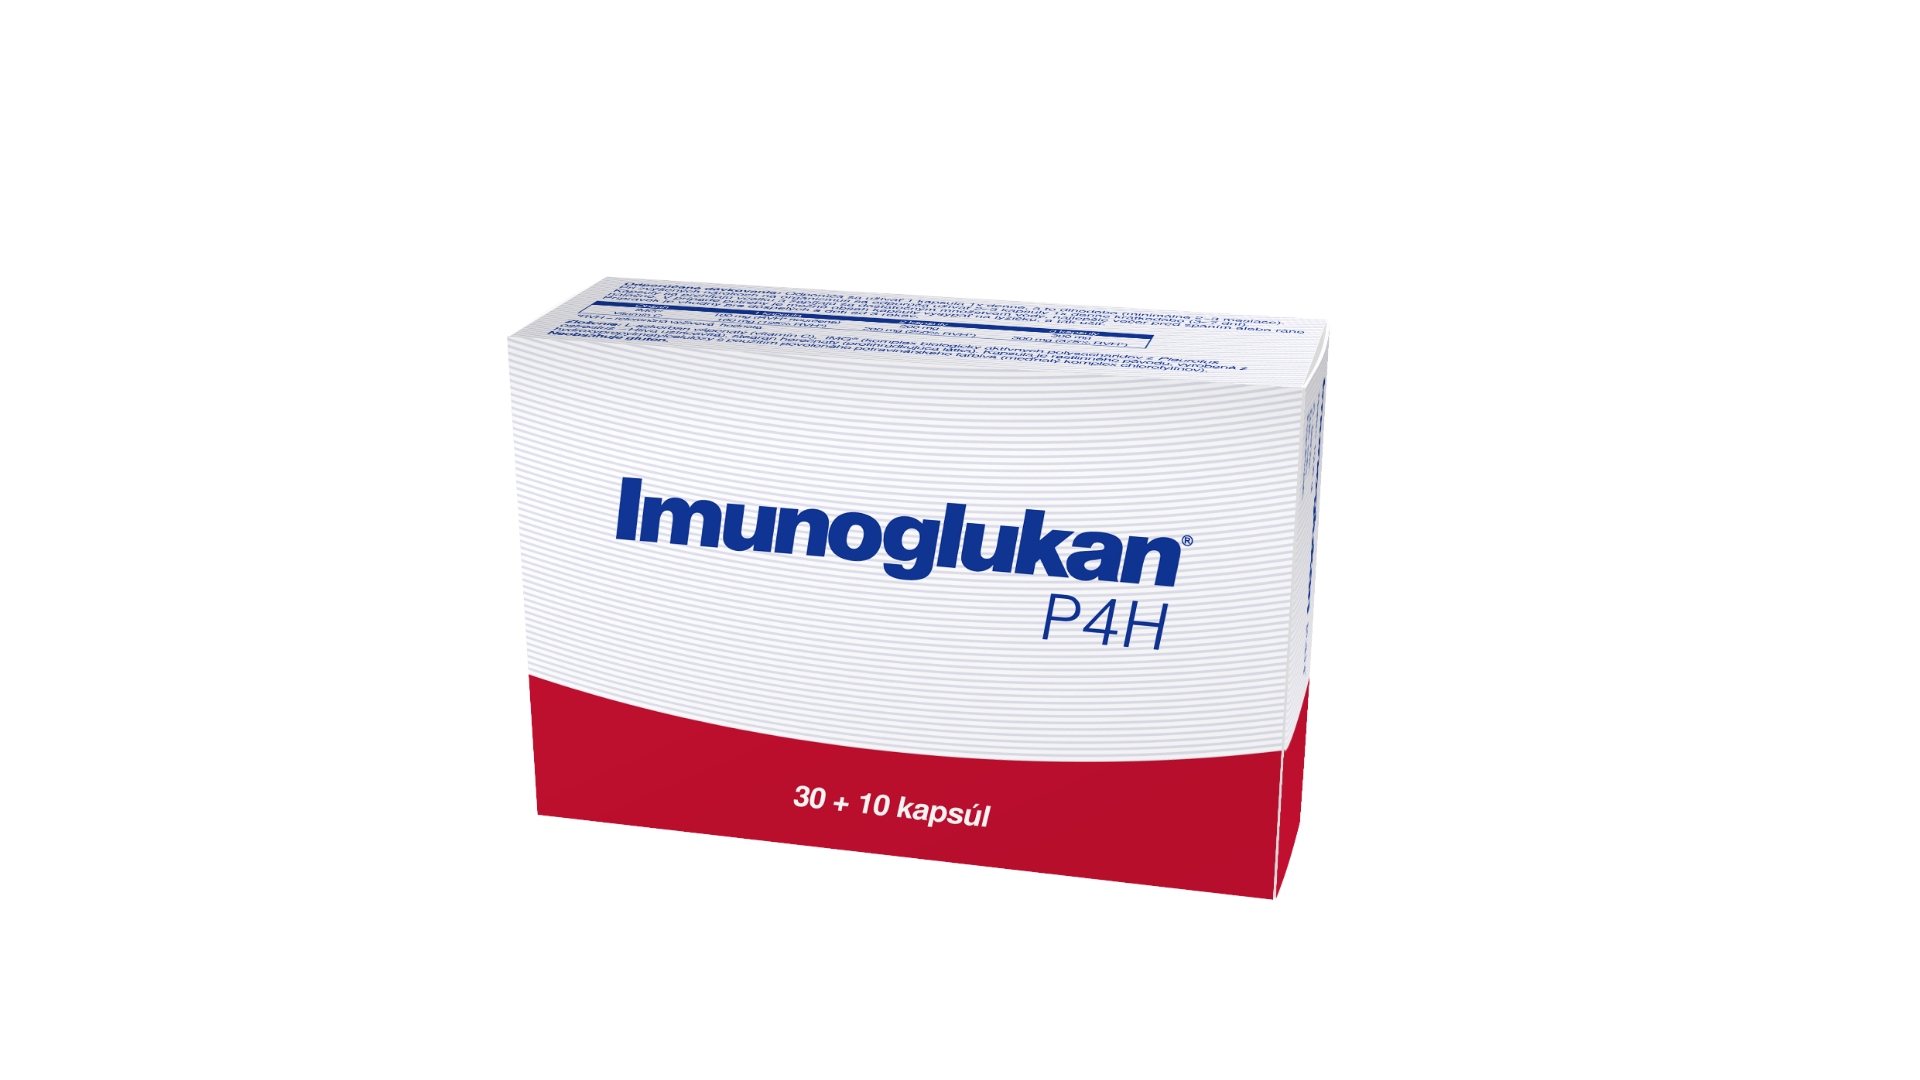 Imunoglukan P4H 100 mg